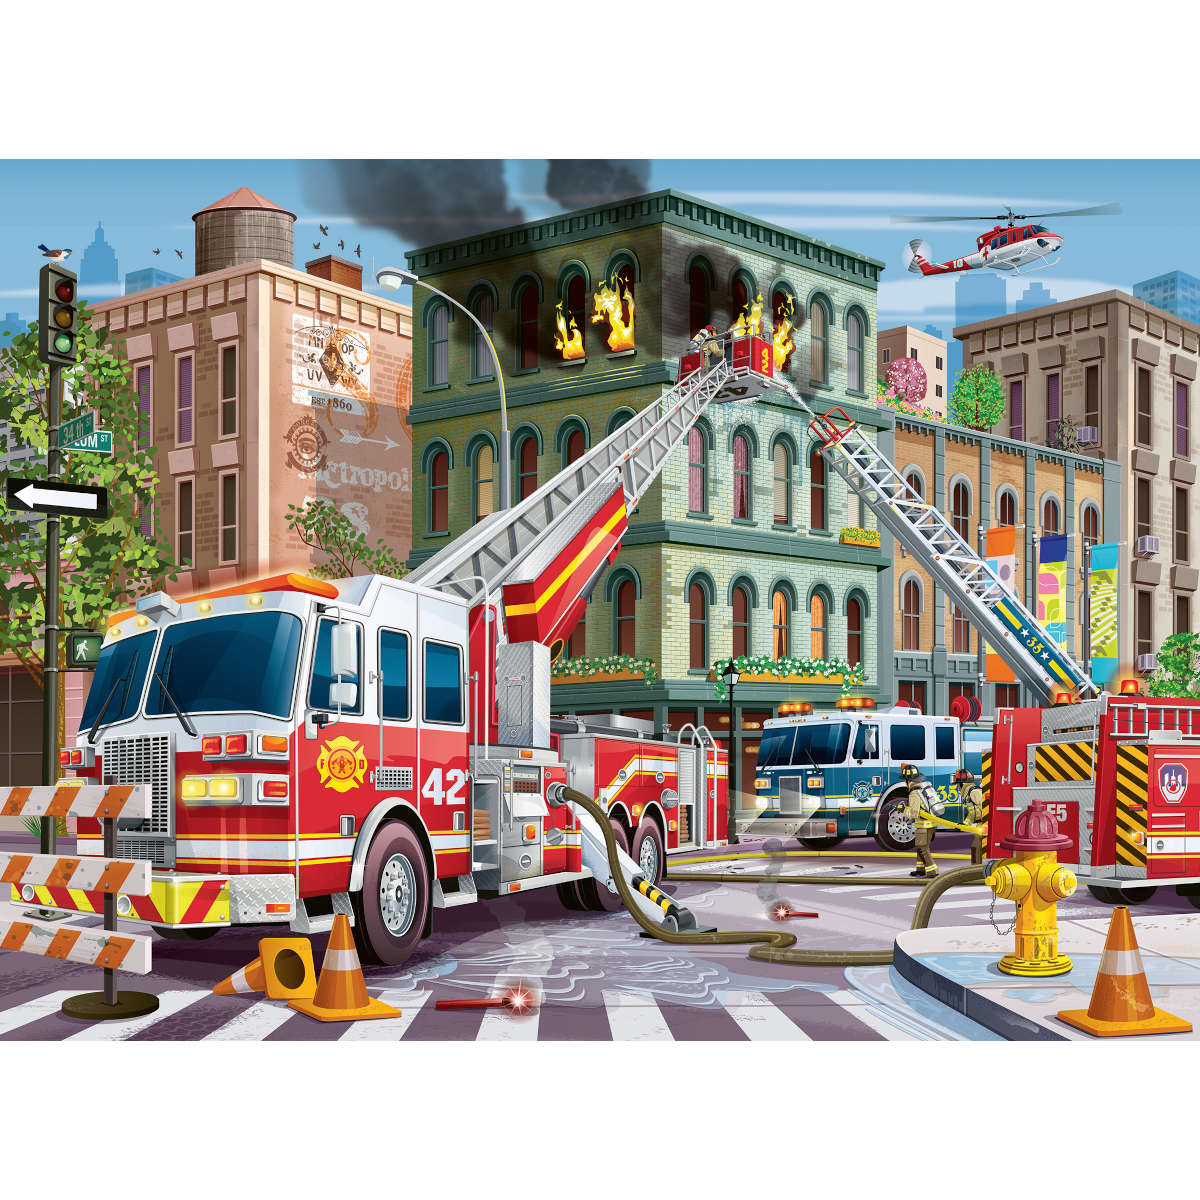 Ravensburger Fire Truck Rescue 100 XXL pc puzzle